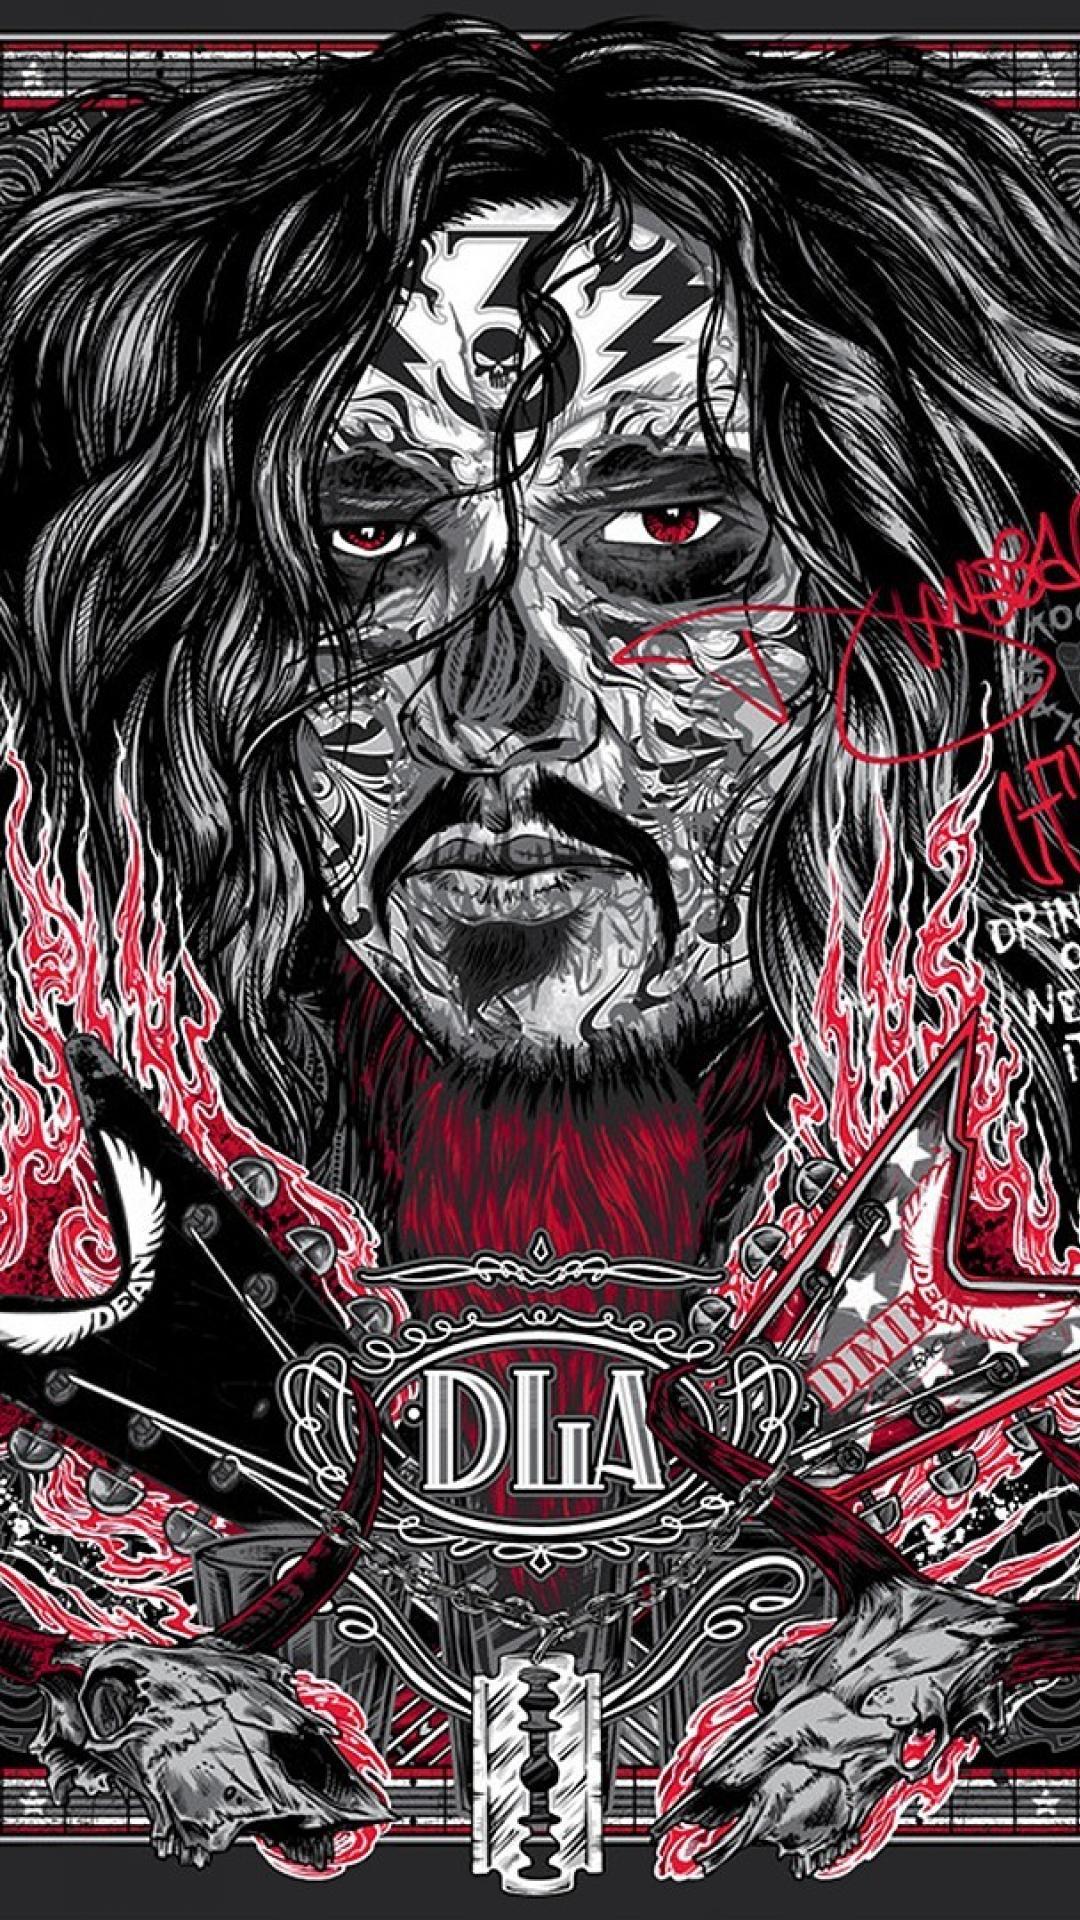 Dimebag darrell pantera fan art metal music wallpaper